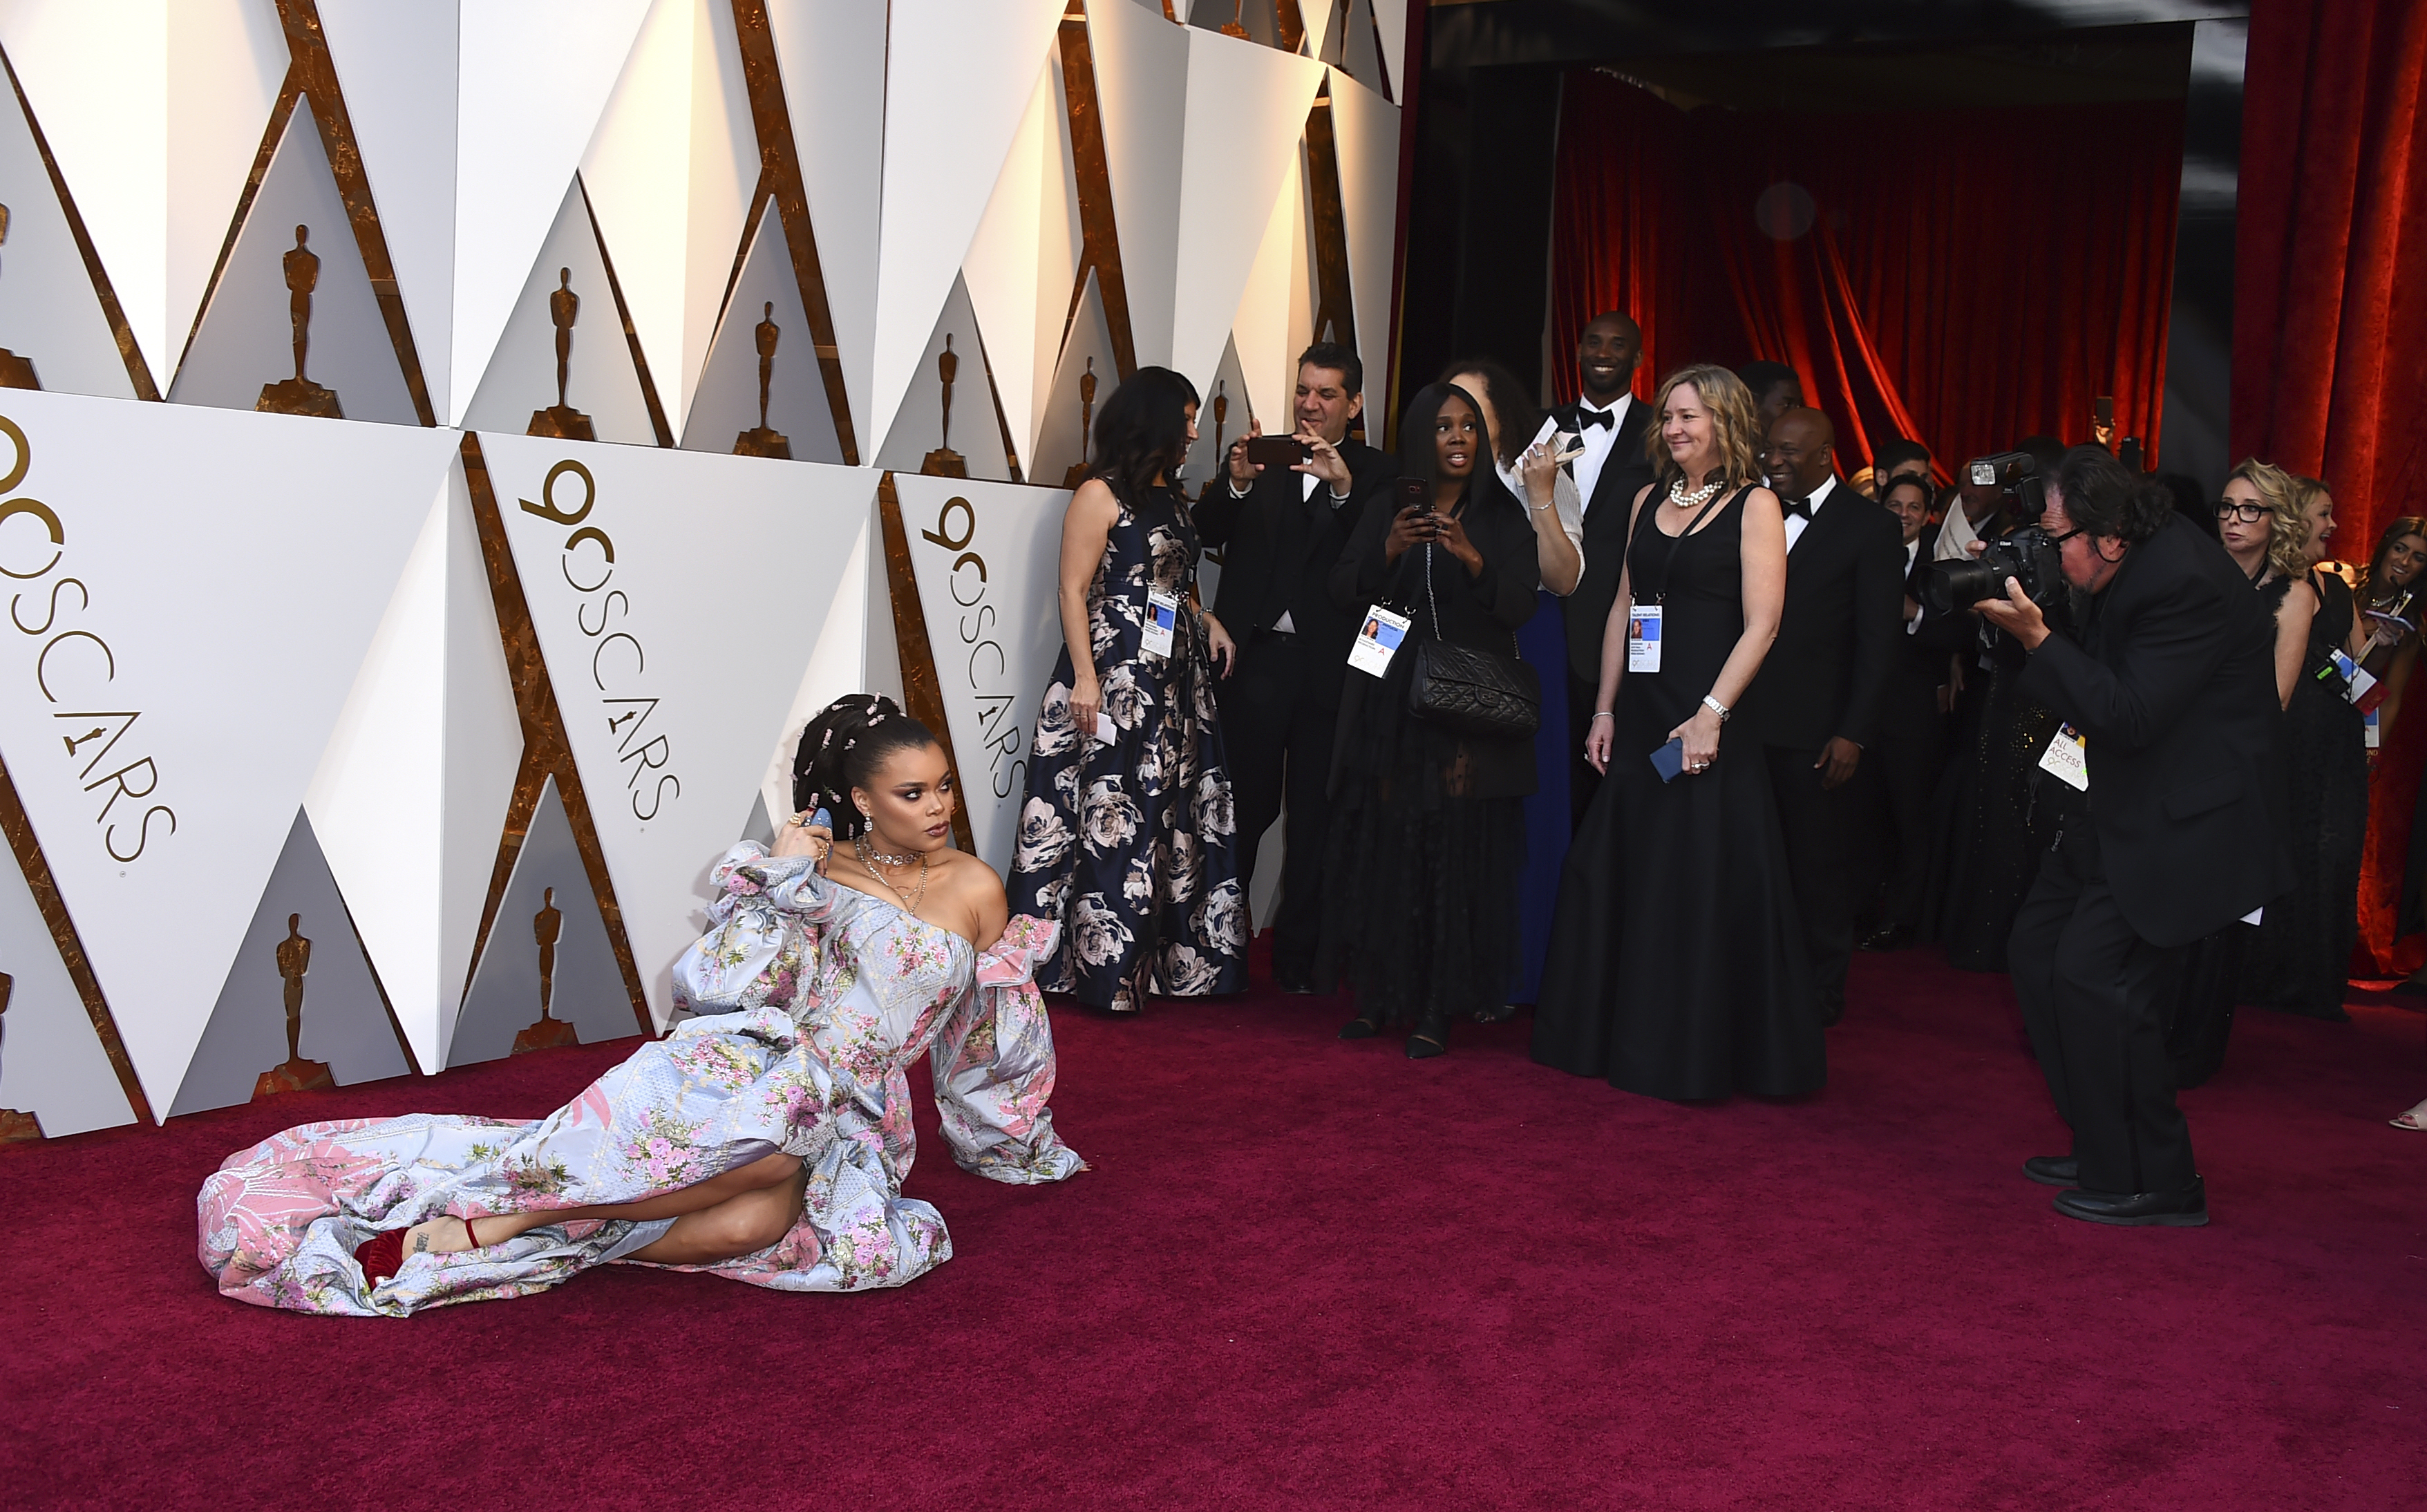 PHOTOS: Stars arrive at the Oscars 2018 red carpet | abc13.com